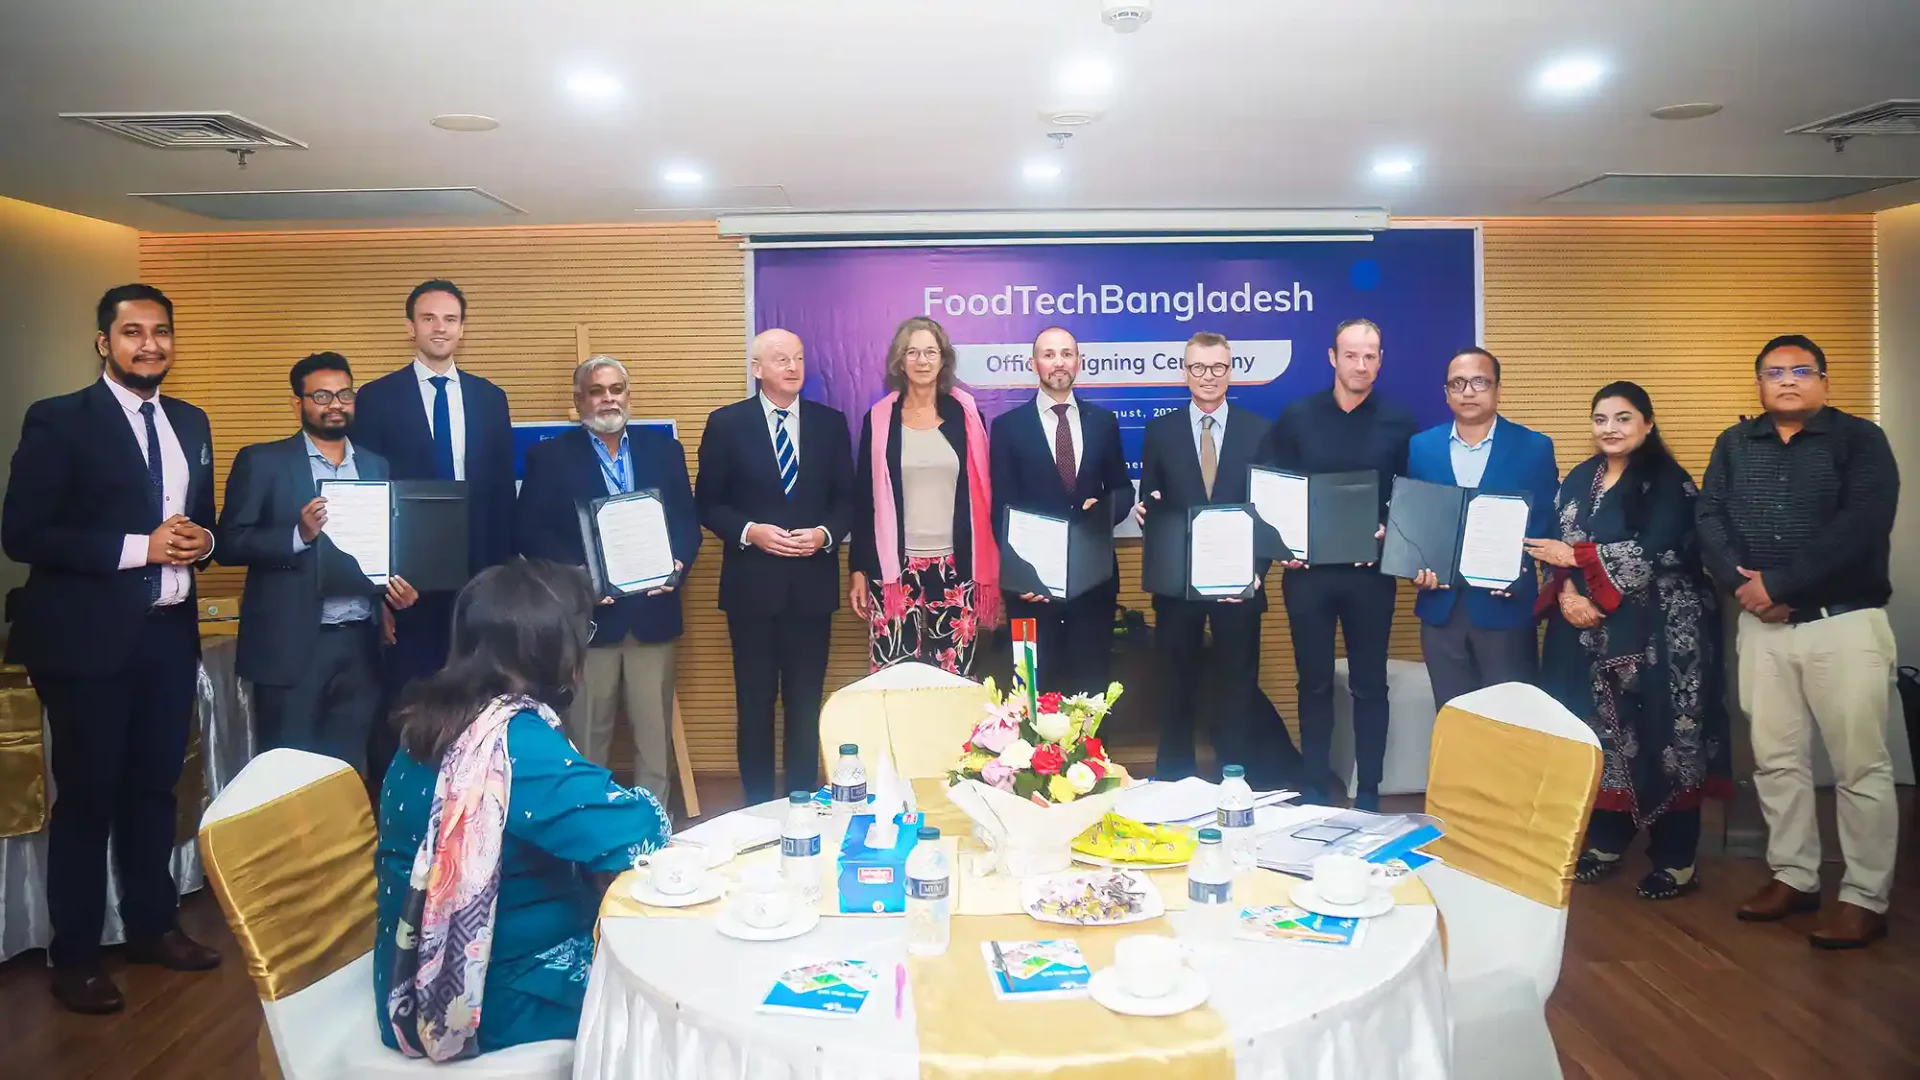 Dutch-Bangladeshi Partnership Launches FoodTechBangladesh to Develop Sustainable Aquaculture